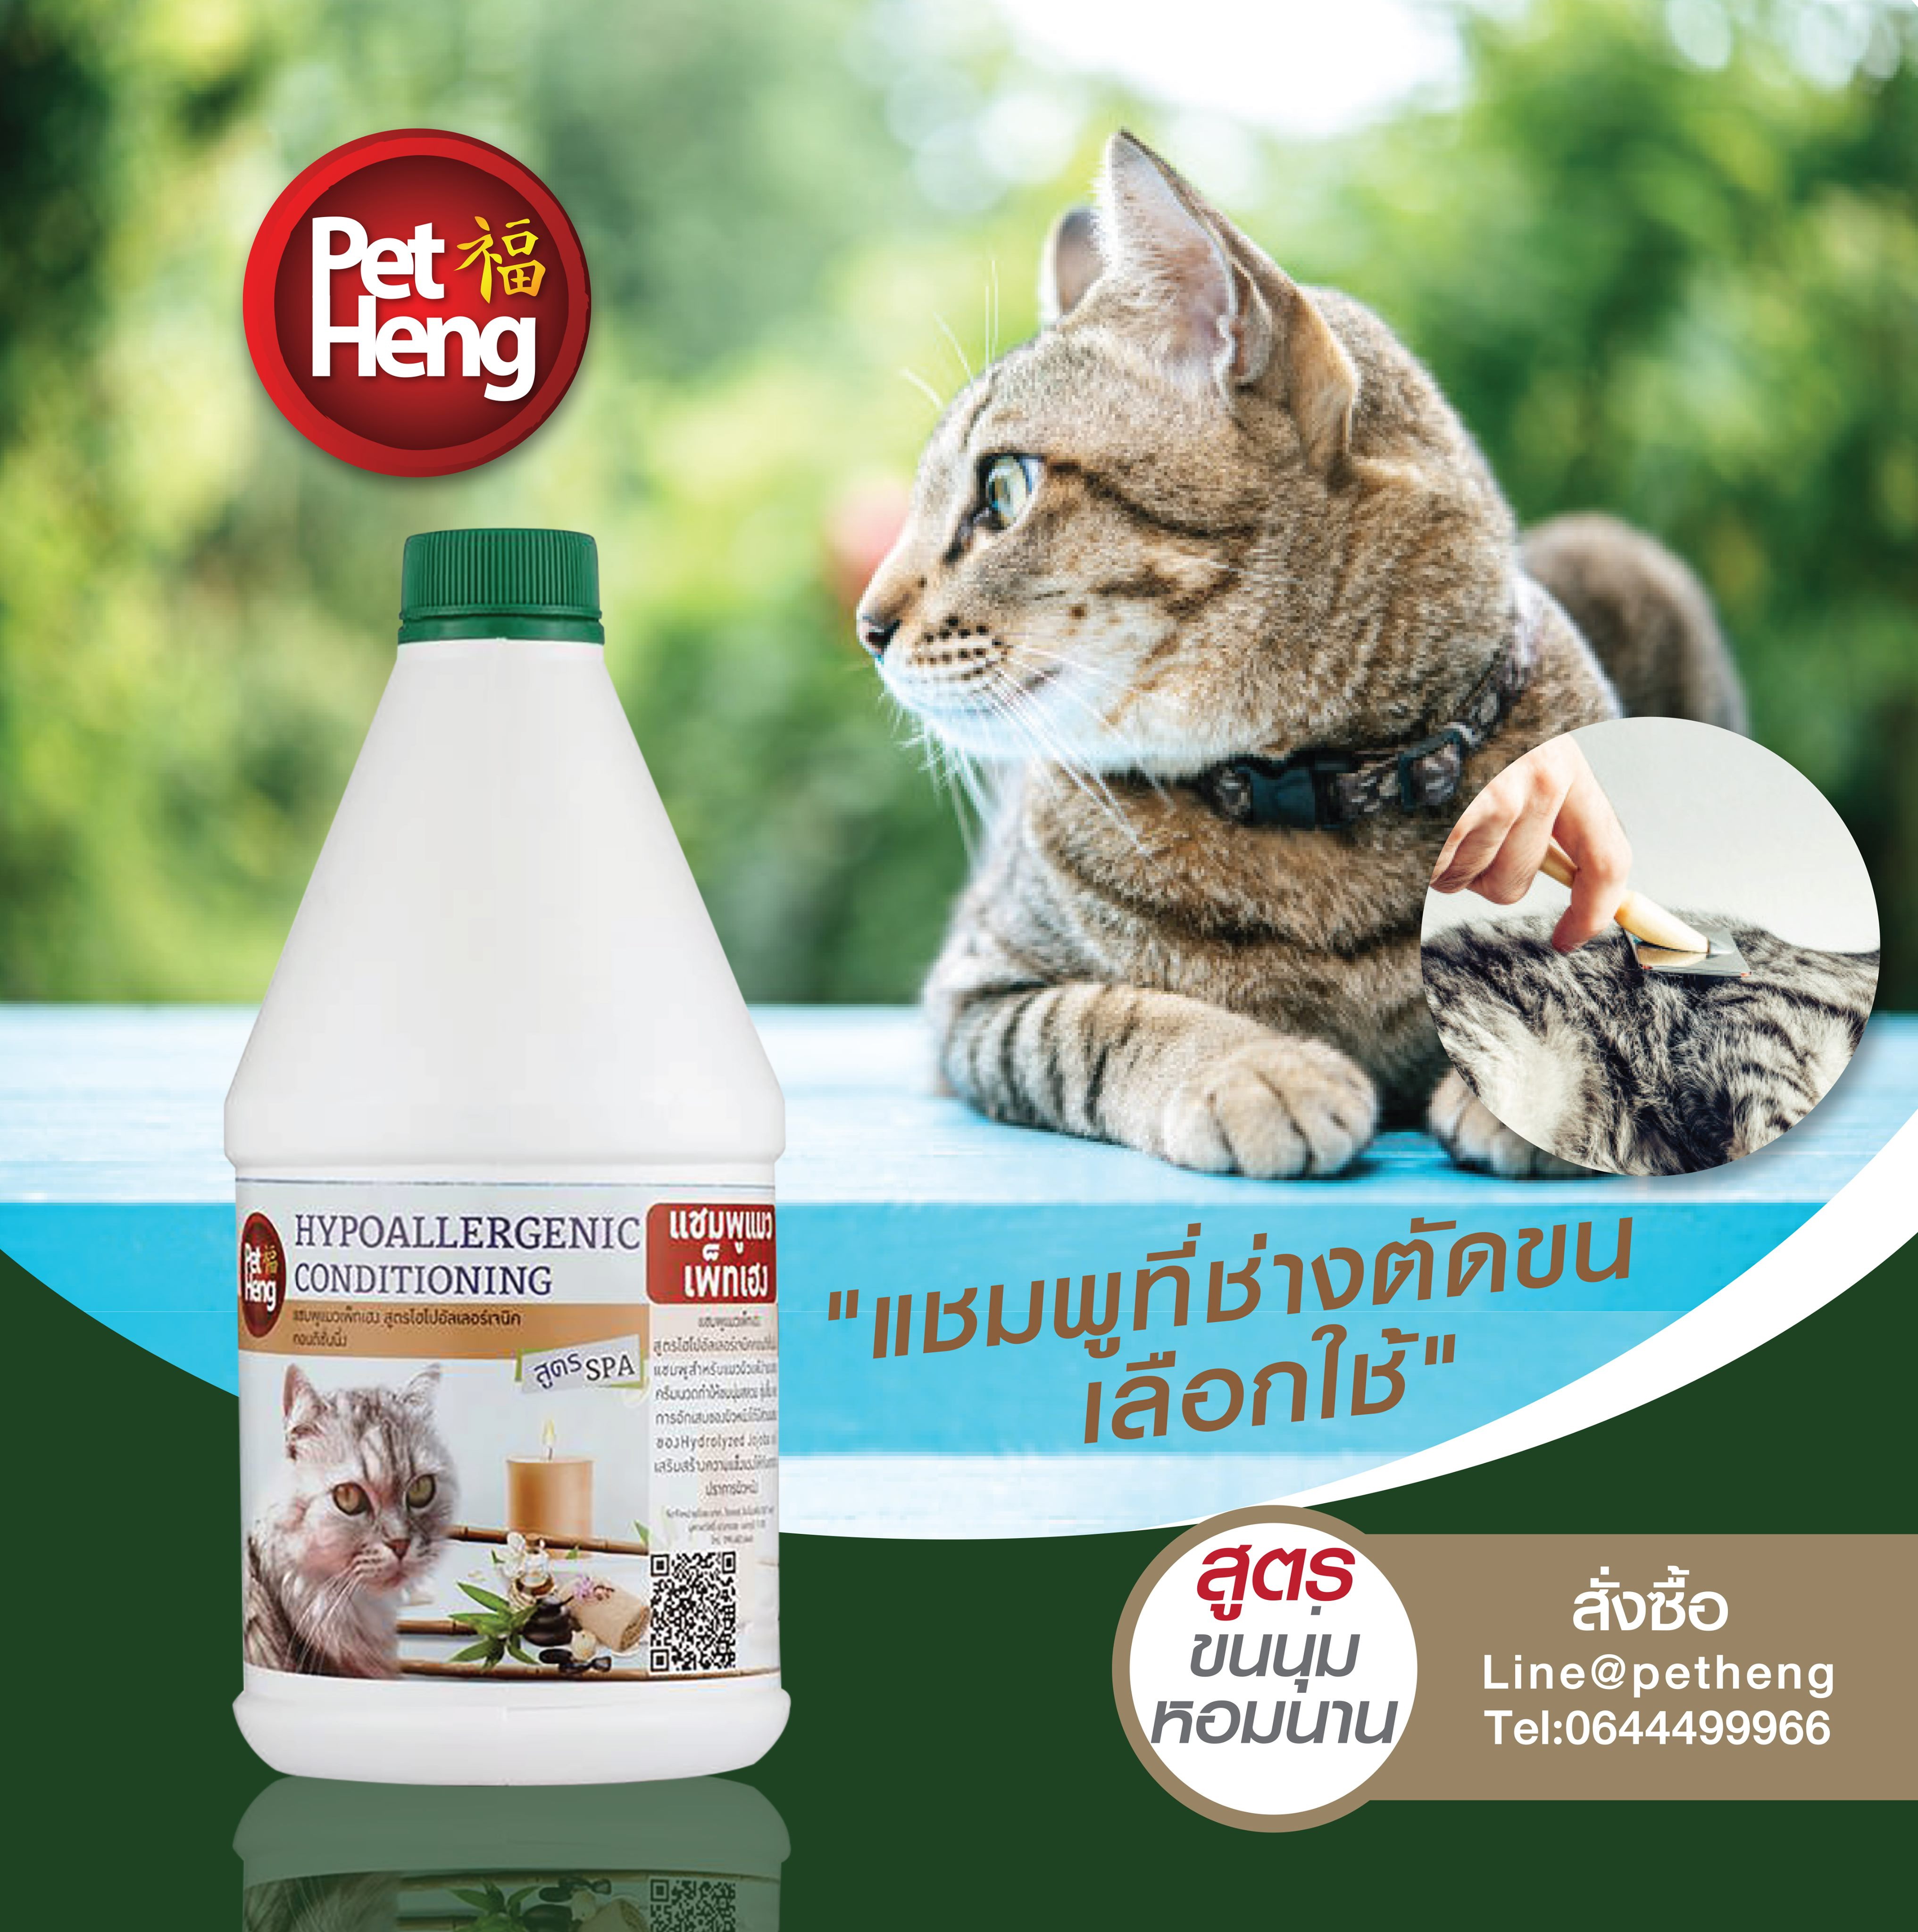 Petheng Cat Shampoo Shed Control เพ็ทเฮงแชมพูแมวป้องกันเห็บ หมัด ไร ลดการหลุดร่วงของขน 1000 ml. กลิ่นพฤกษา